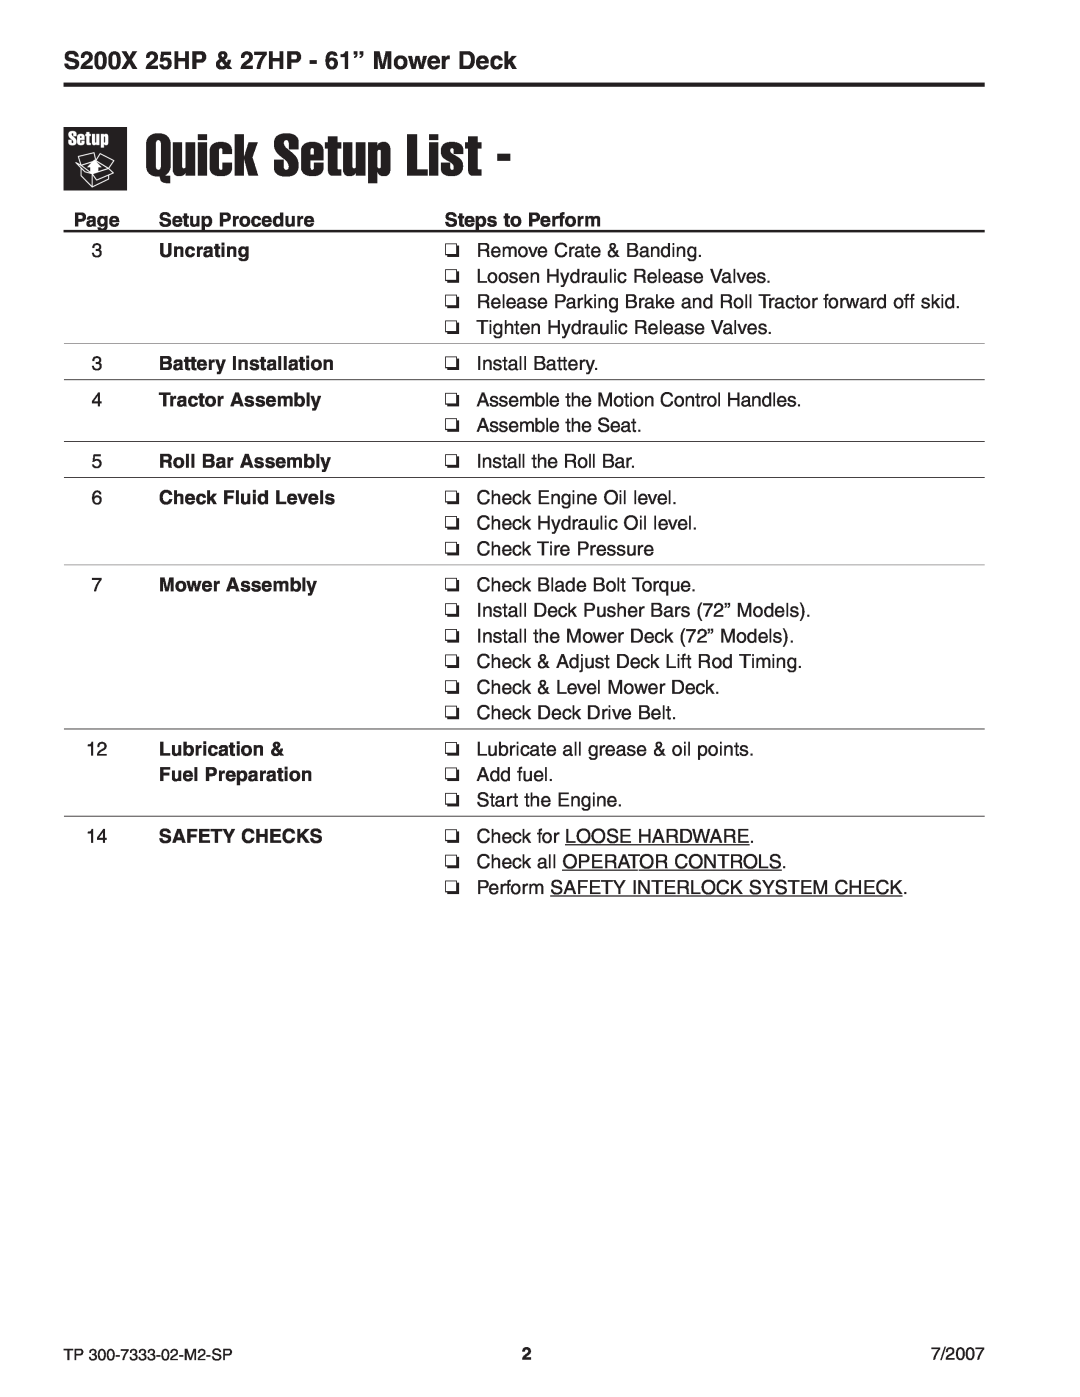 Briggs & Stratton 5900692, 5900664 manual S200X 25HP & 27HP - 61” Mower Deck, Quick Setup List 